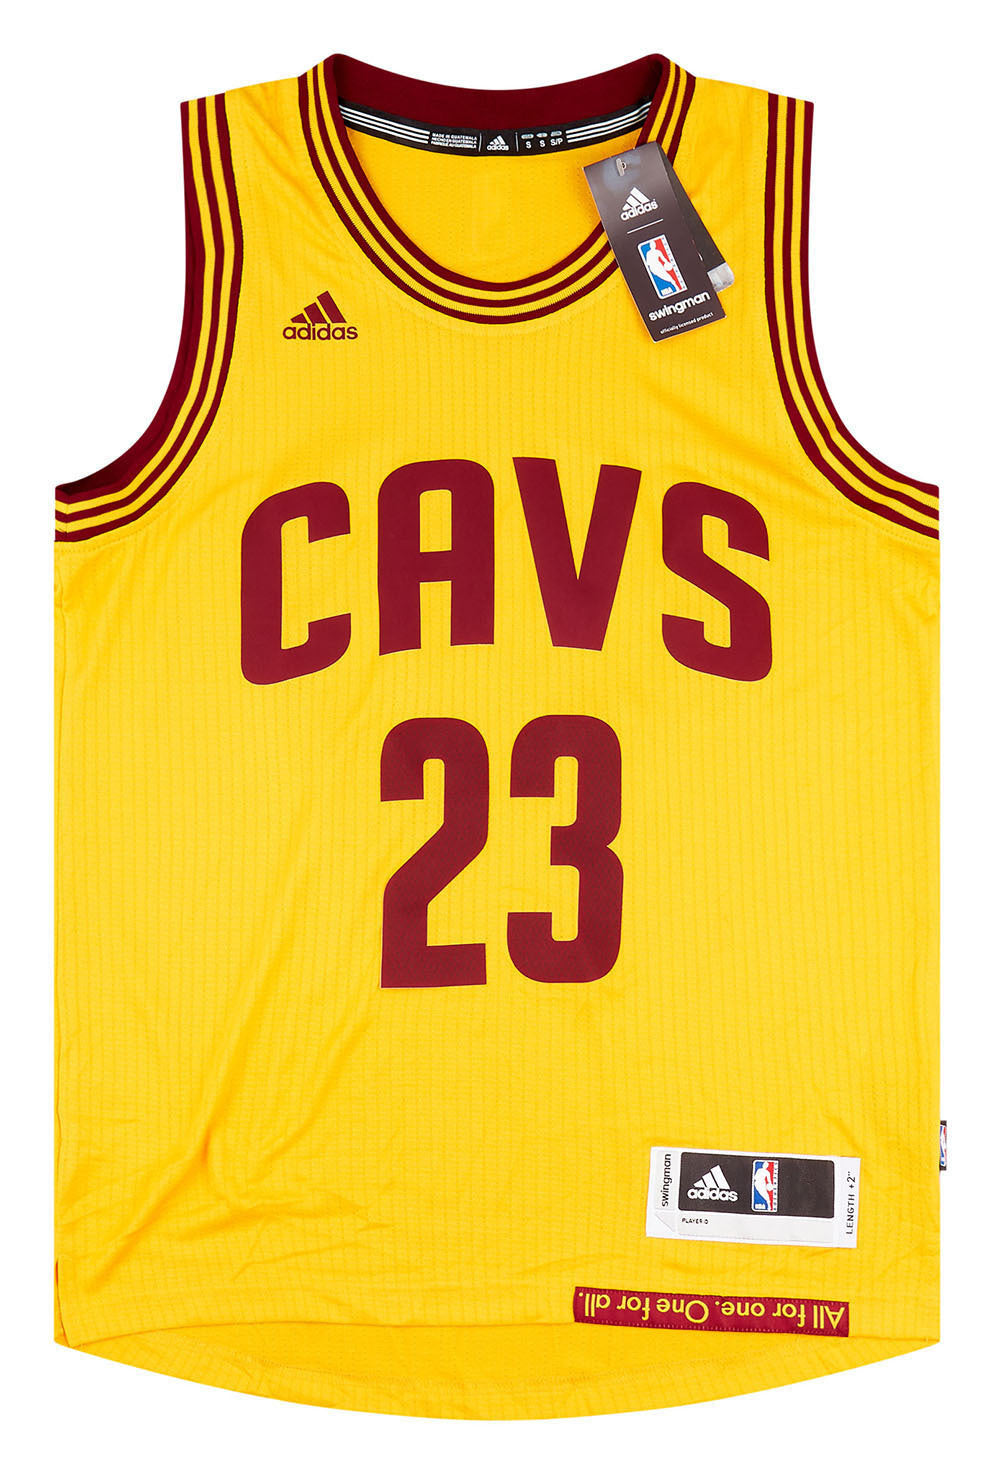 Cleveland Cavaliers Alternate Uniform in 2023